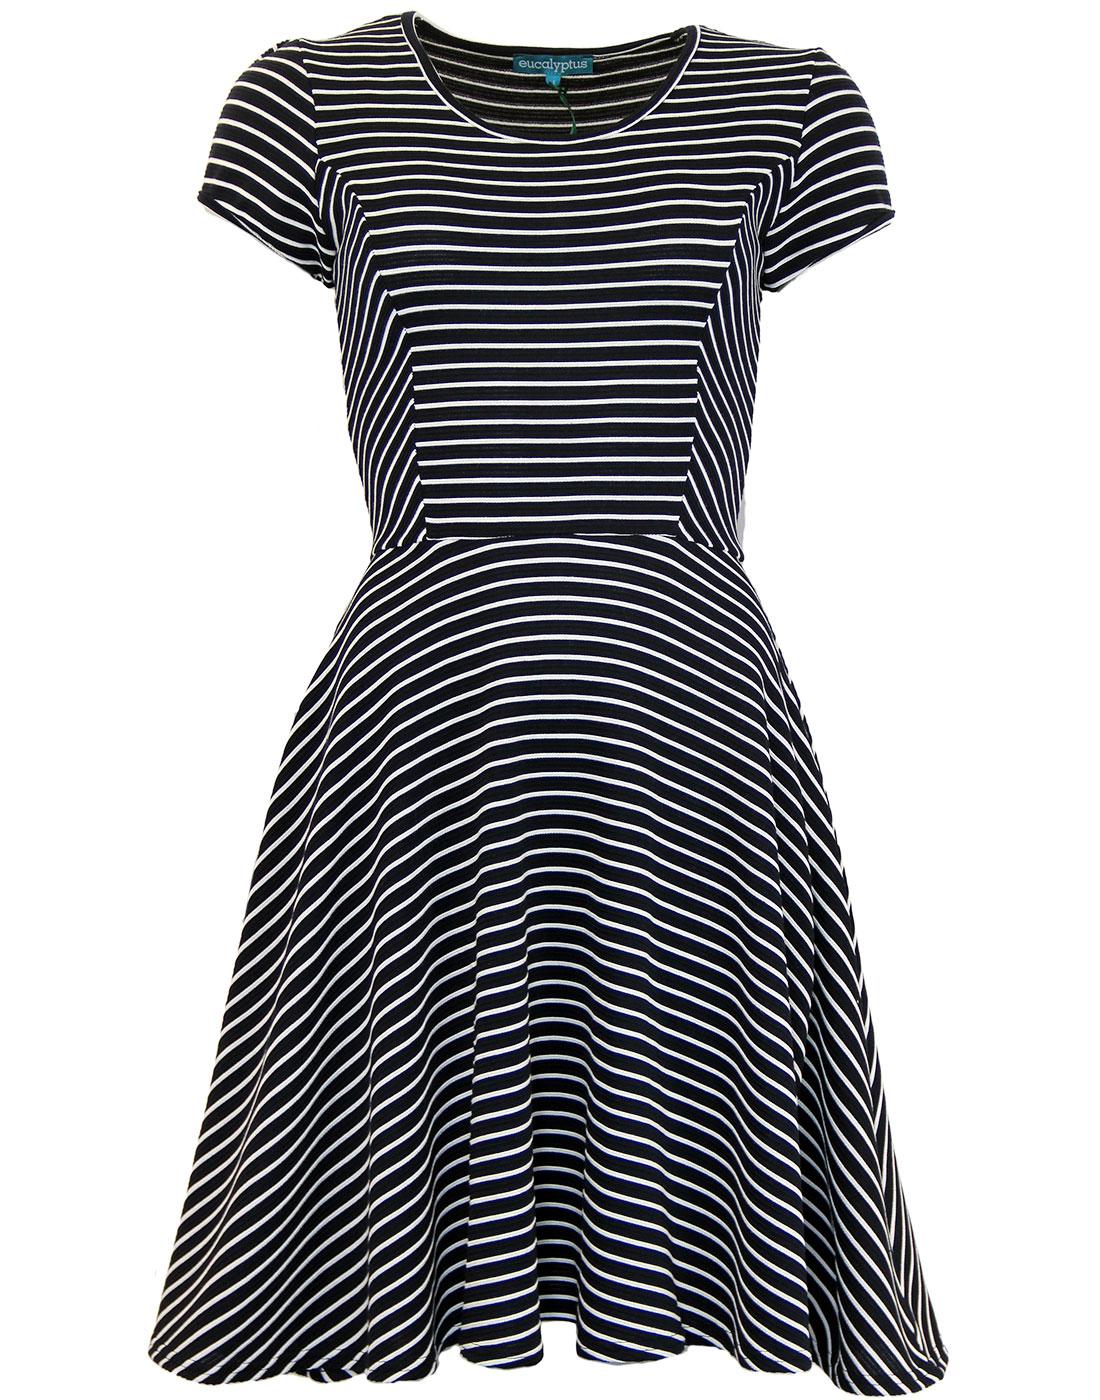 Sally EUCALYPTUS Retro 60s Mod Stripe Skater Dress